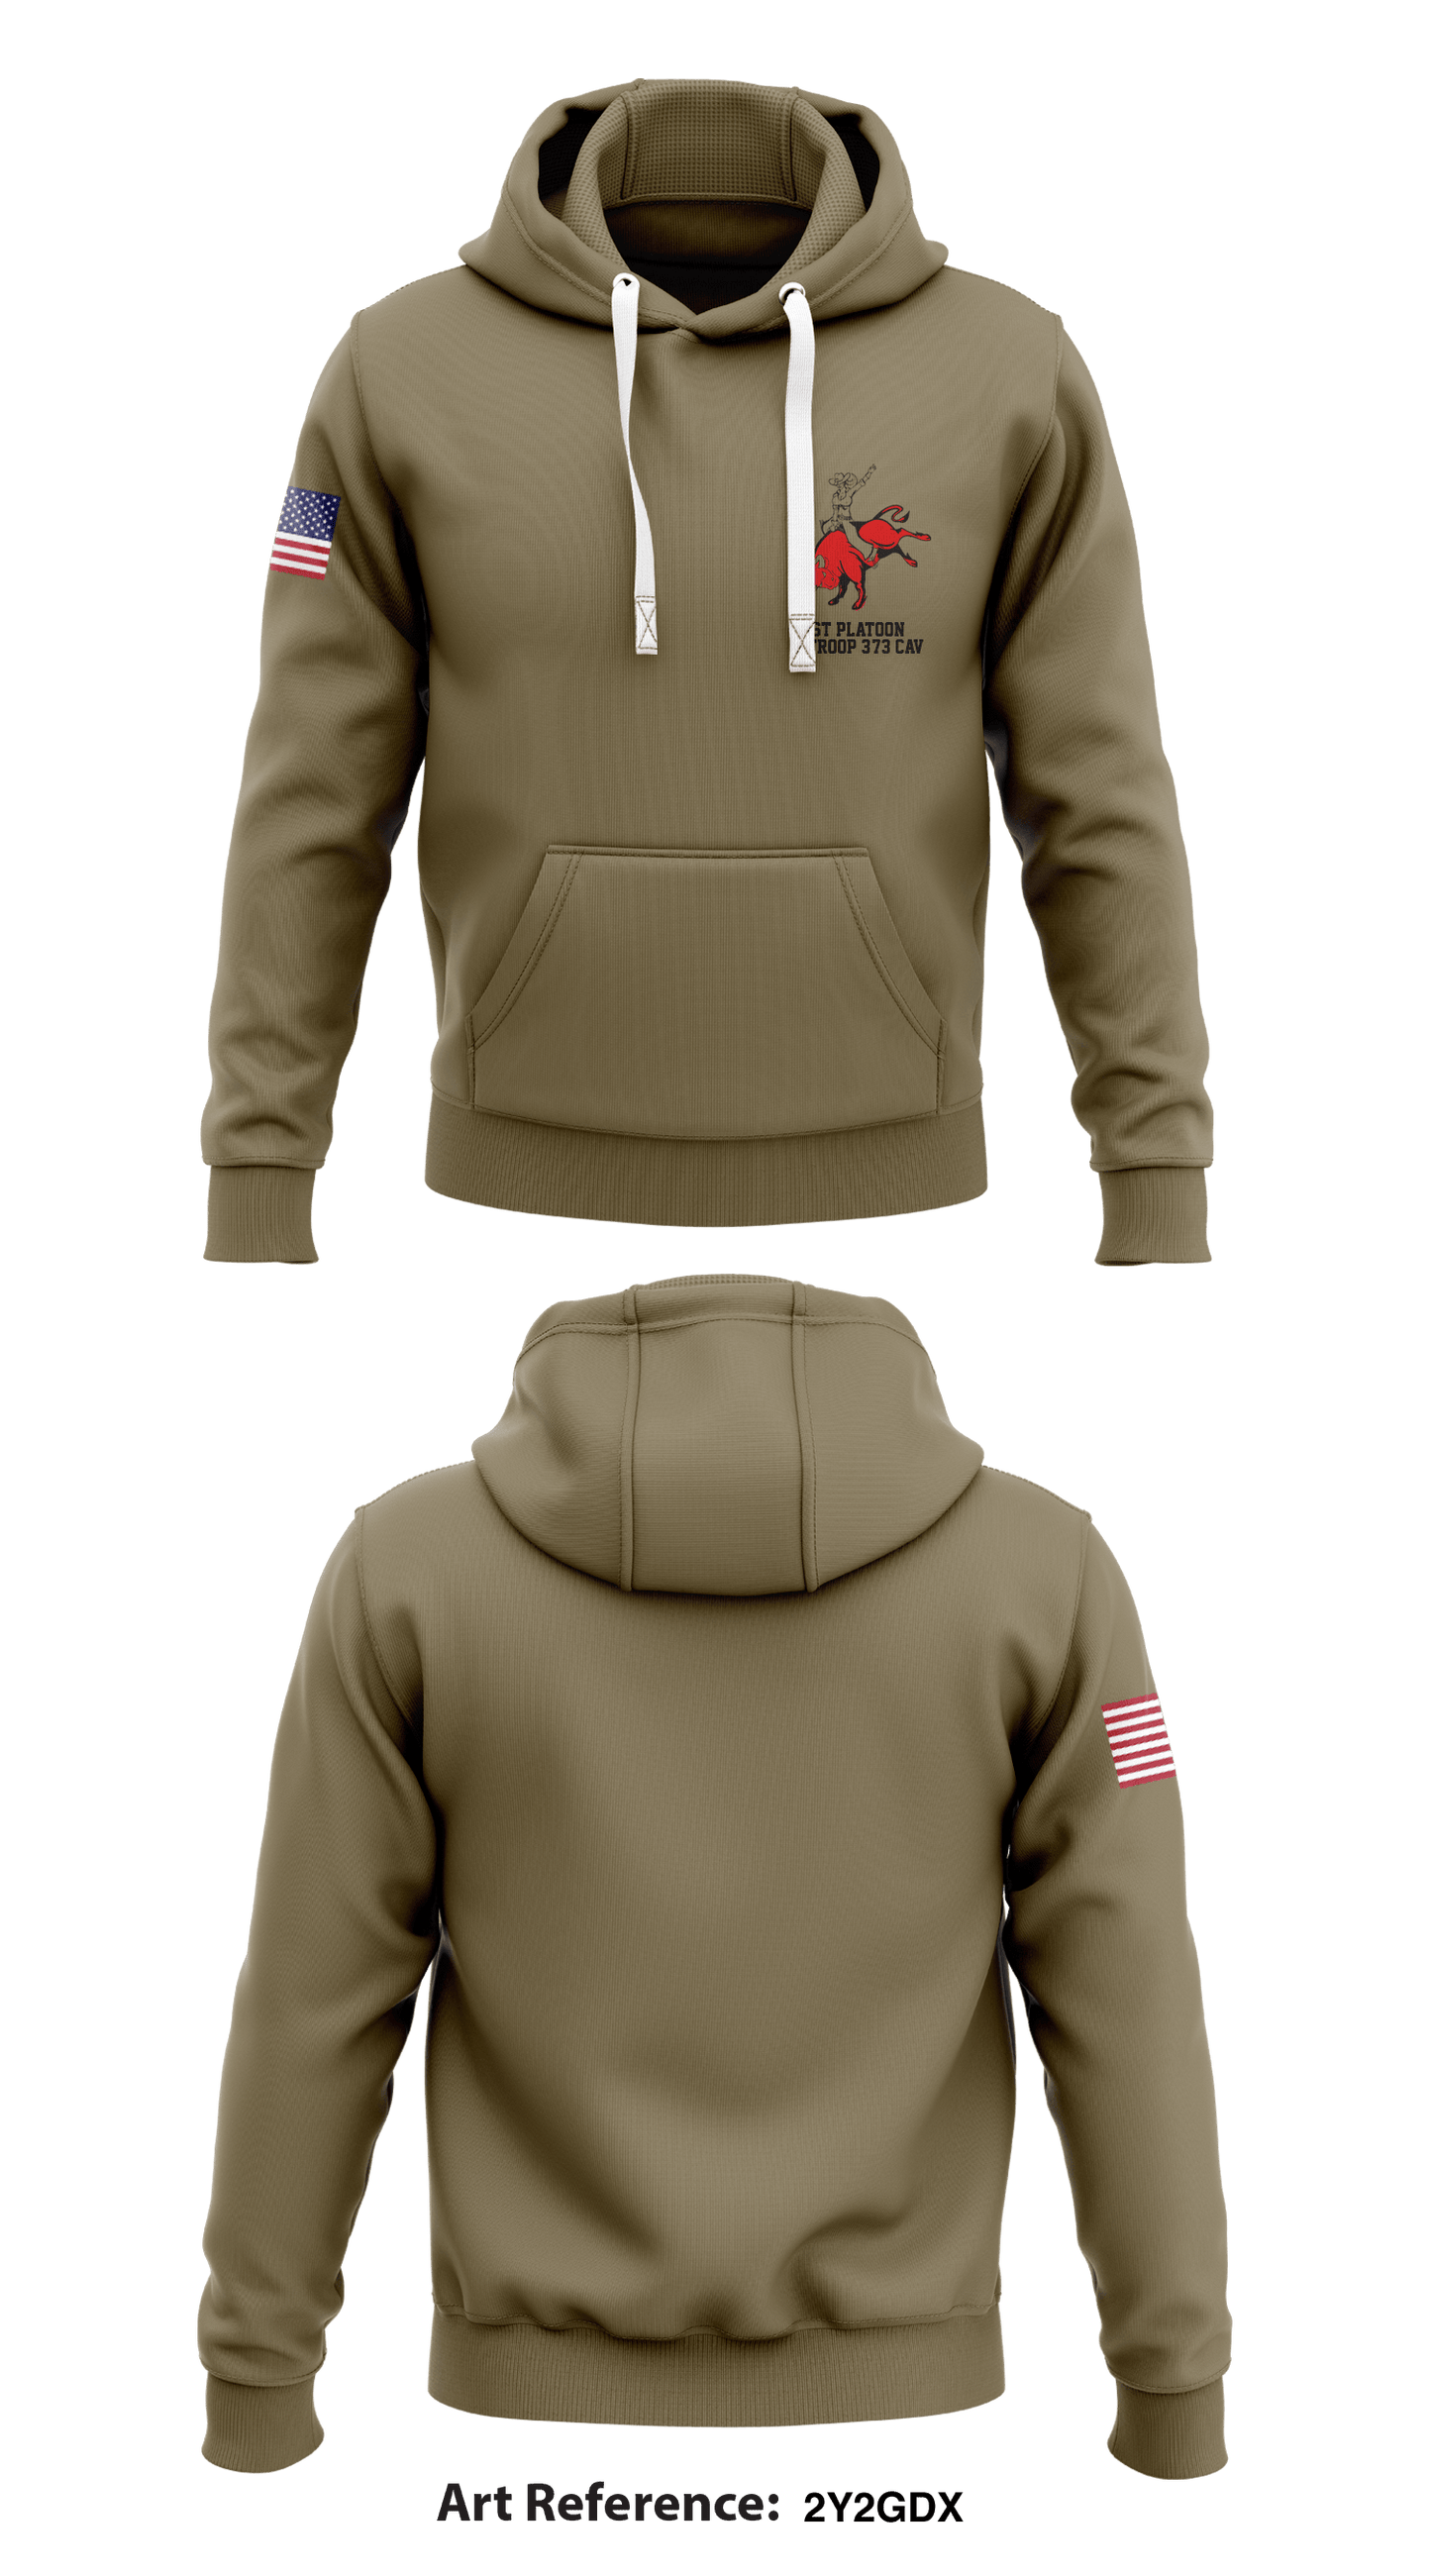 1st platoon B Troop 3-73 CAV Store 1  Core Men's Hooded Performance Sweatshirt - 2Y2GdX